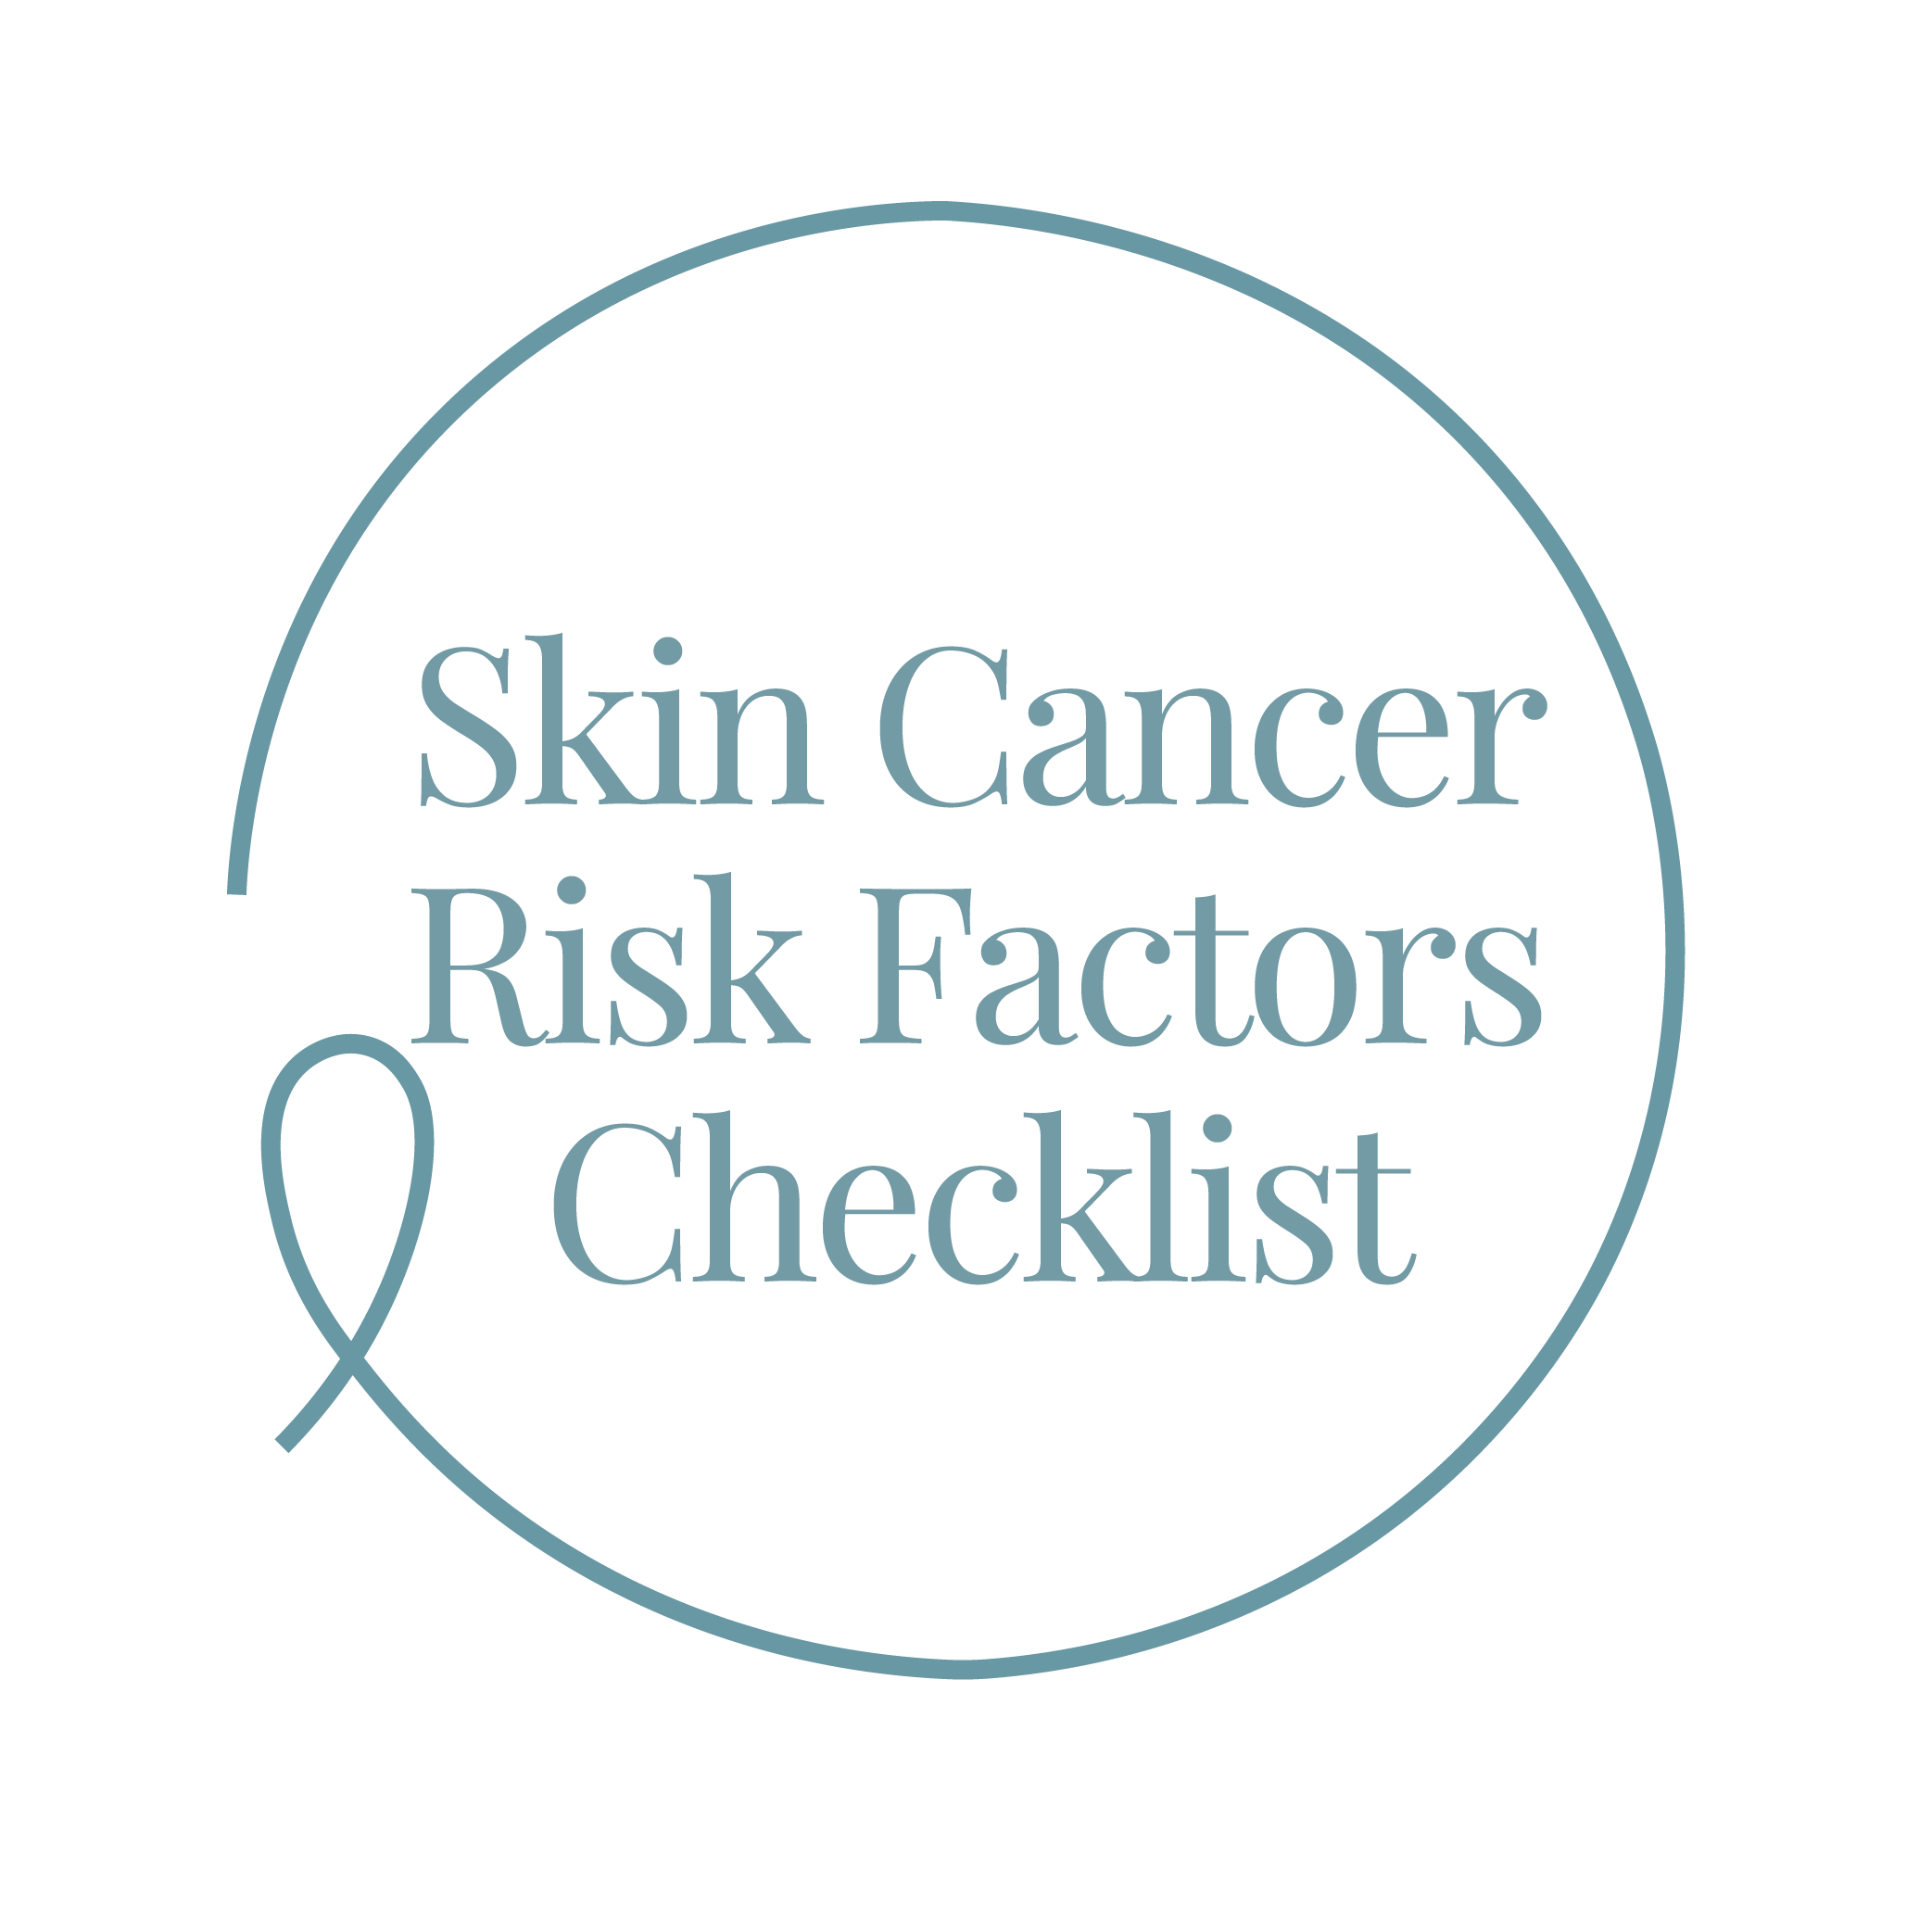 Skin Cancer Risk Factors Checklist